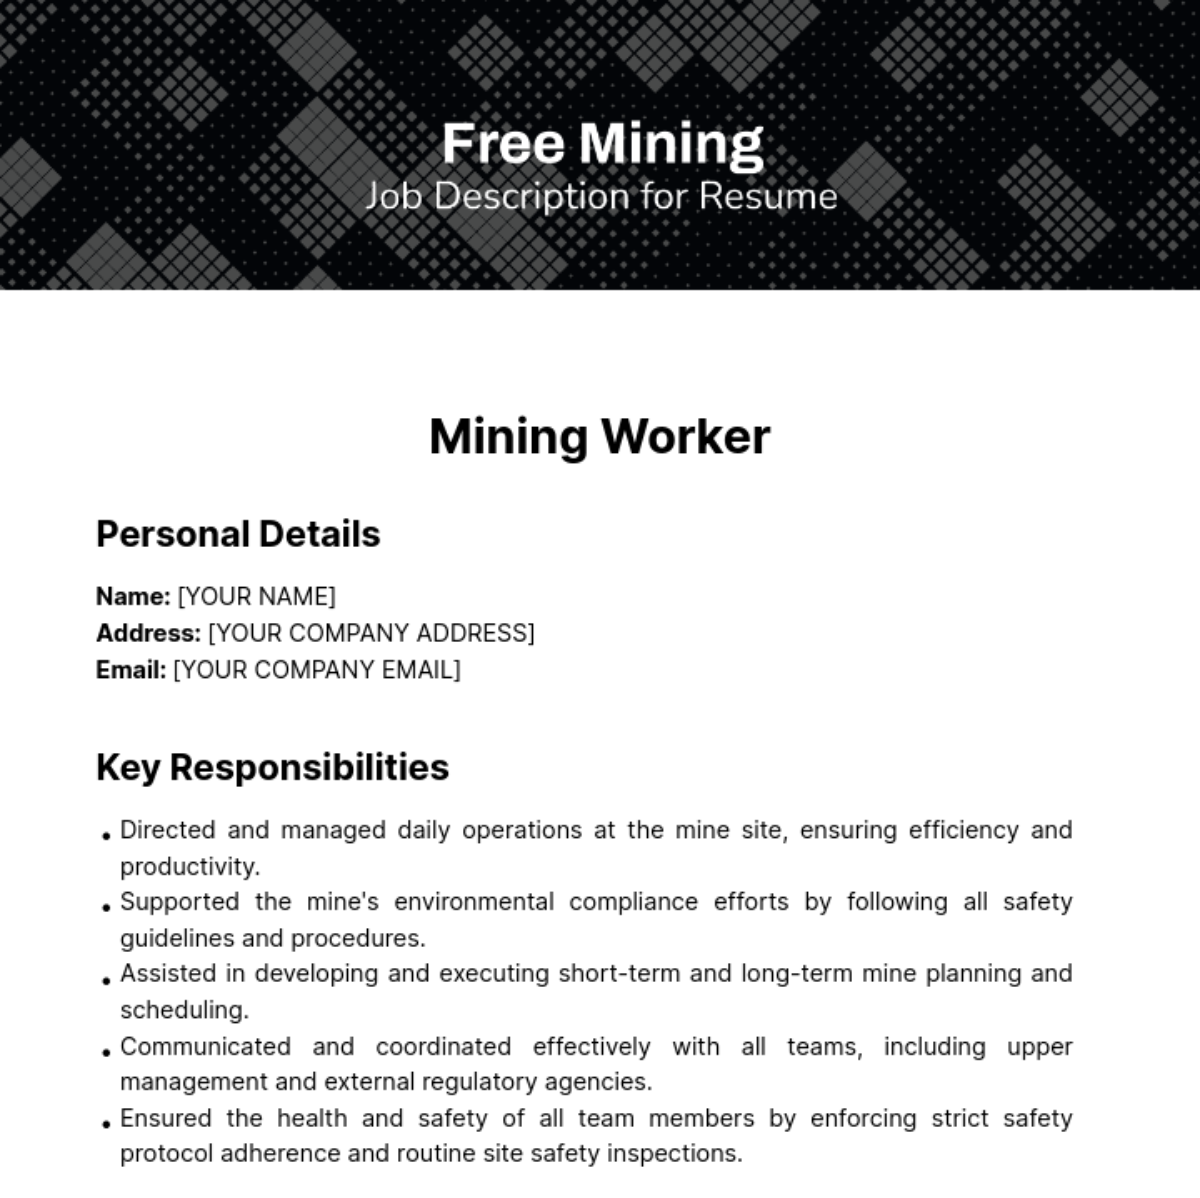 Free Mining Job Description for Resume Template